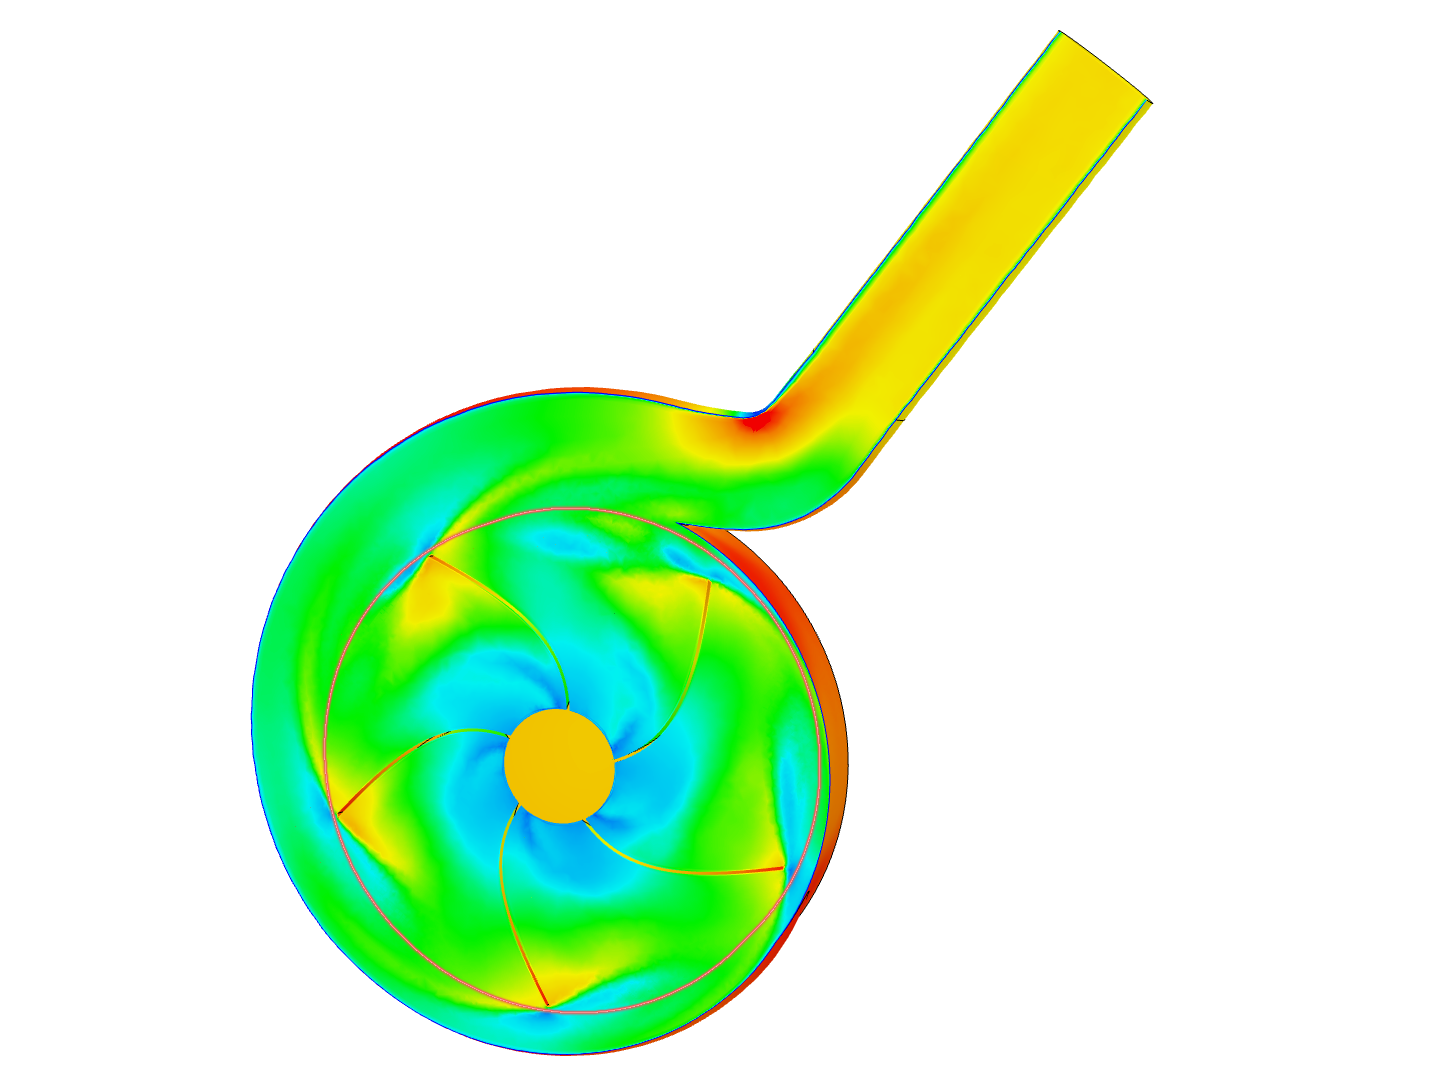 centrifugal pump 2 image